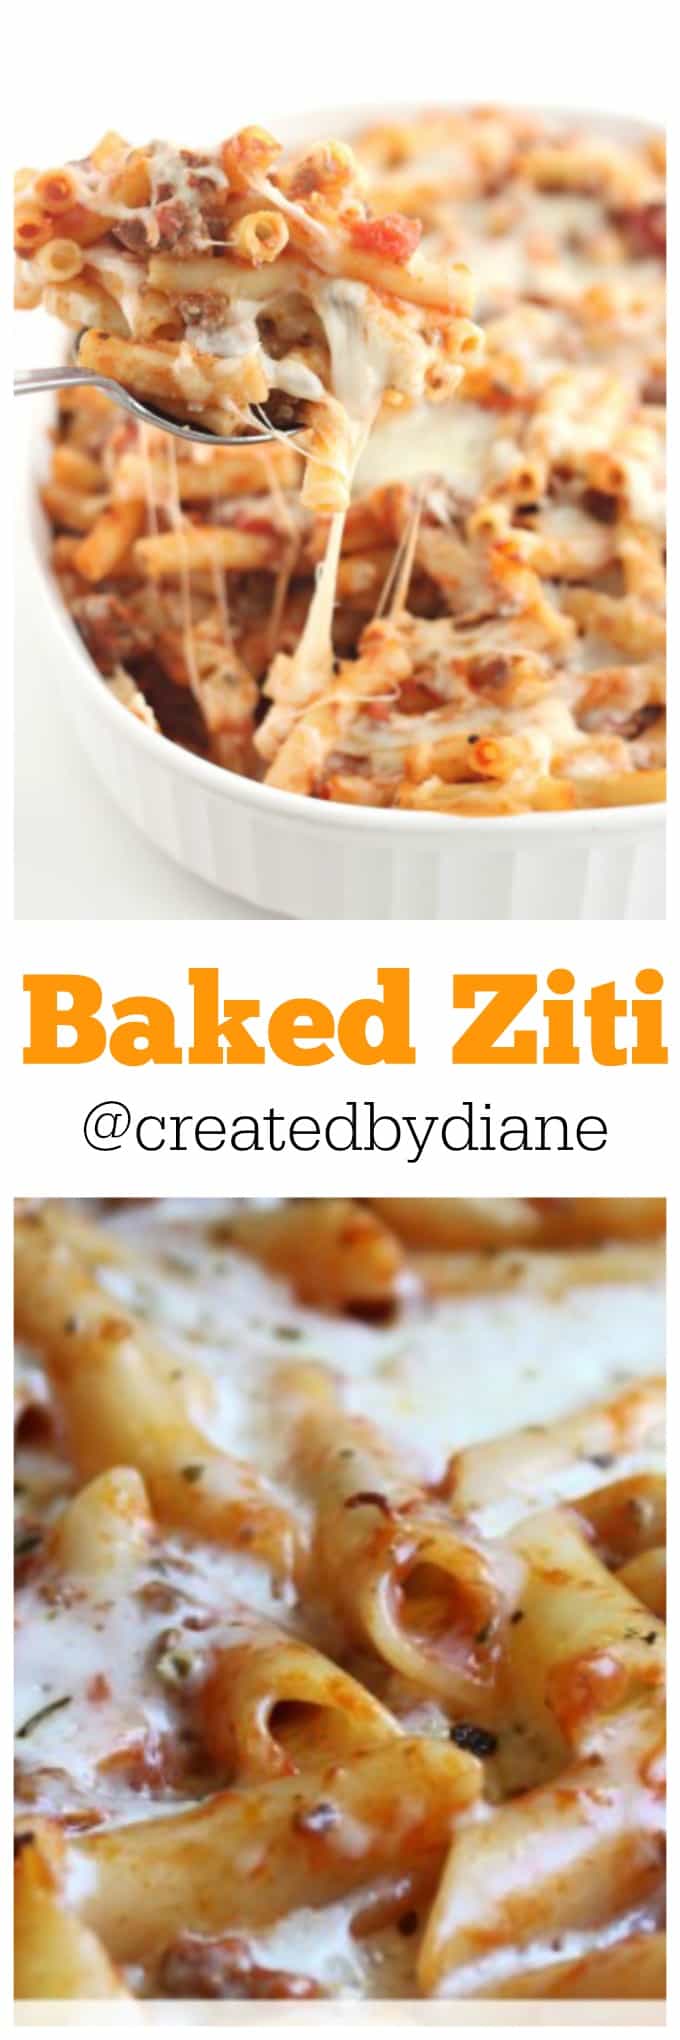 Baked Ziti from @createdbydiane